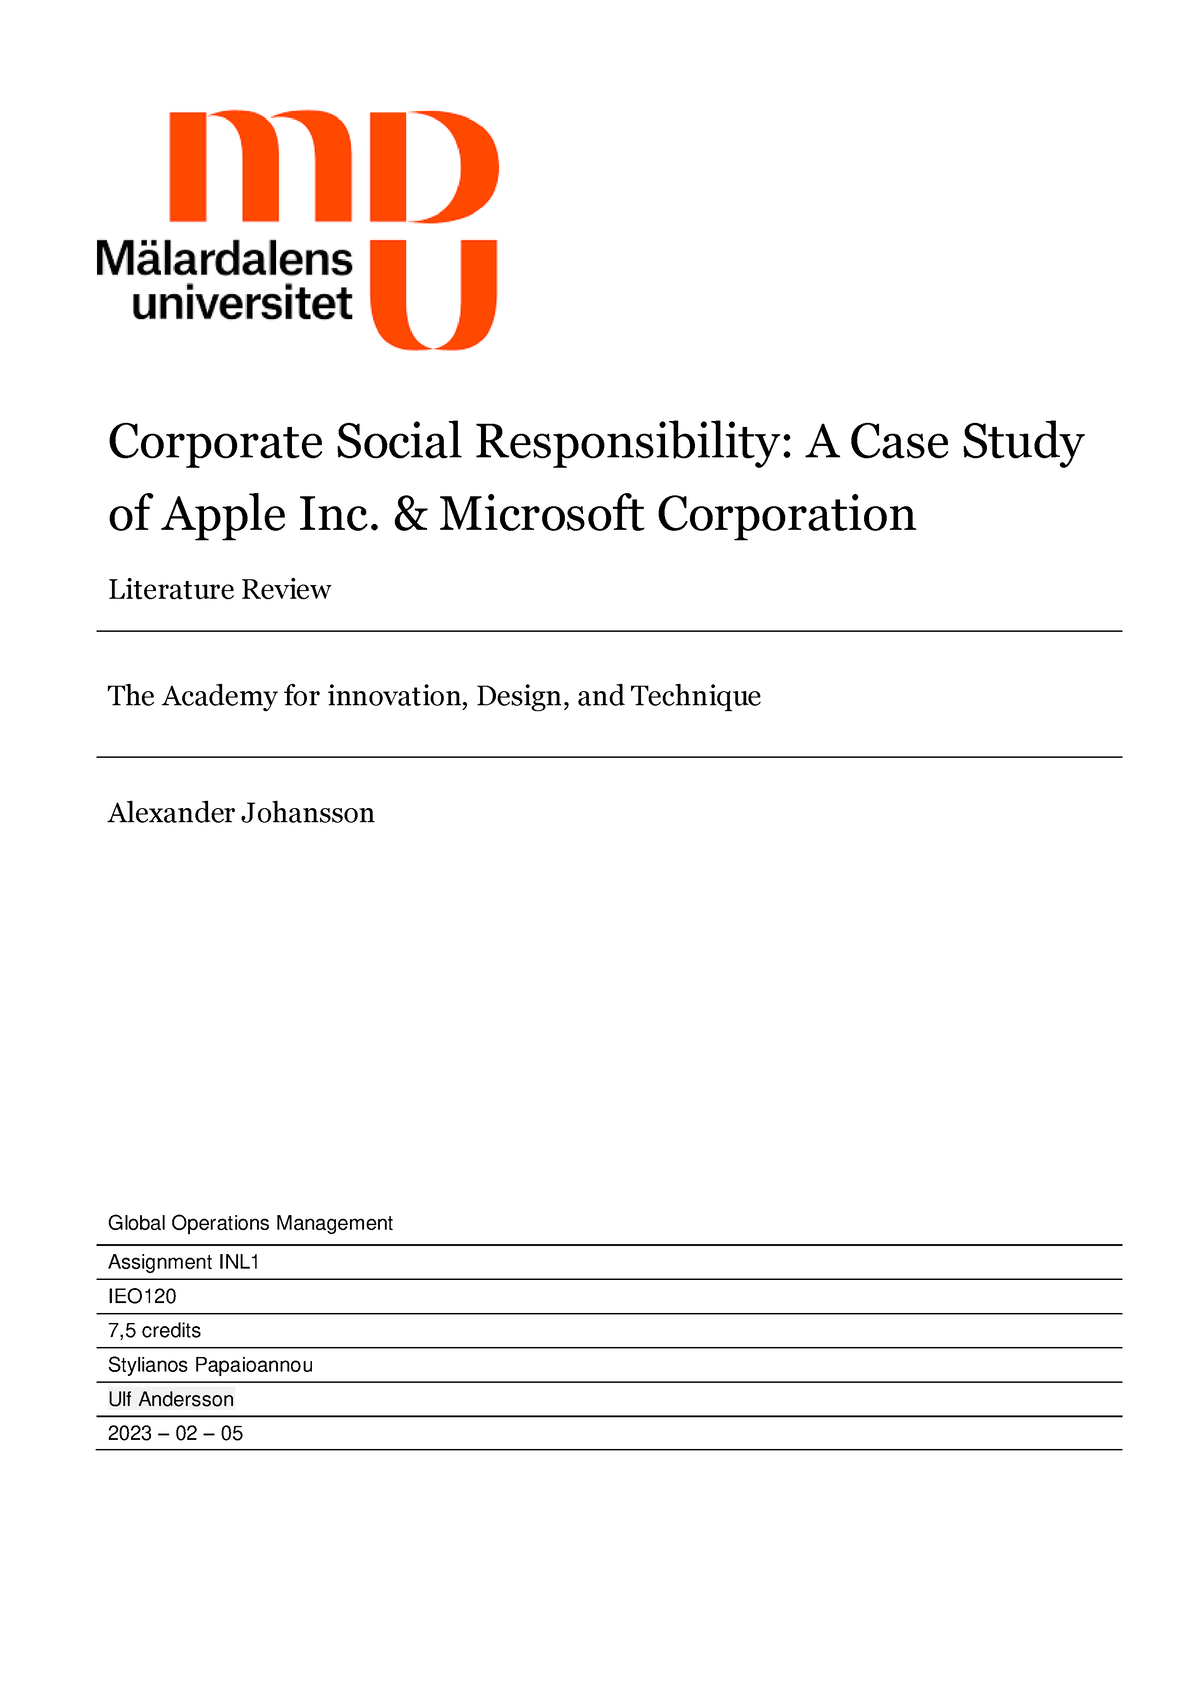 apple case study csr